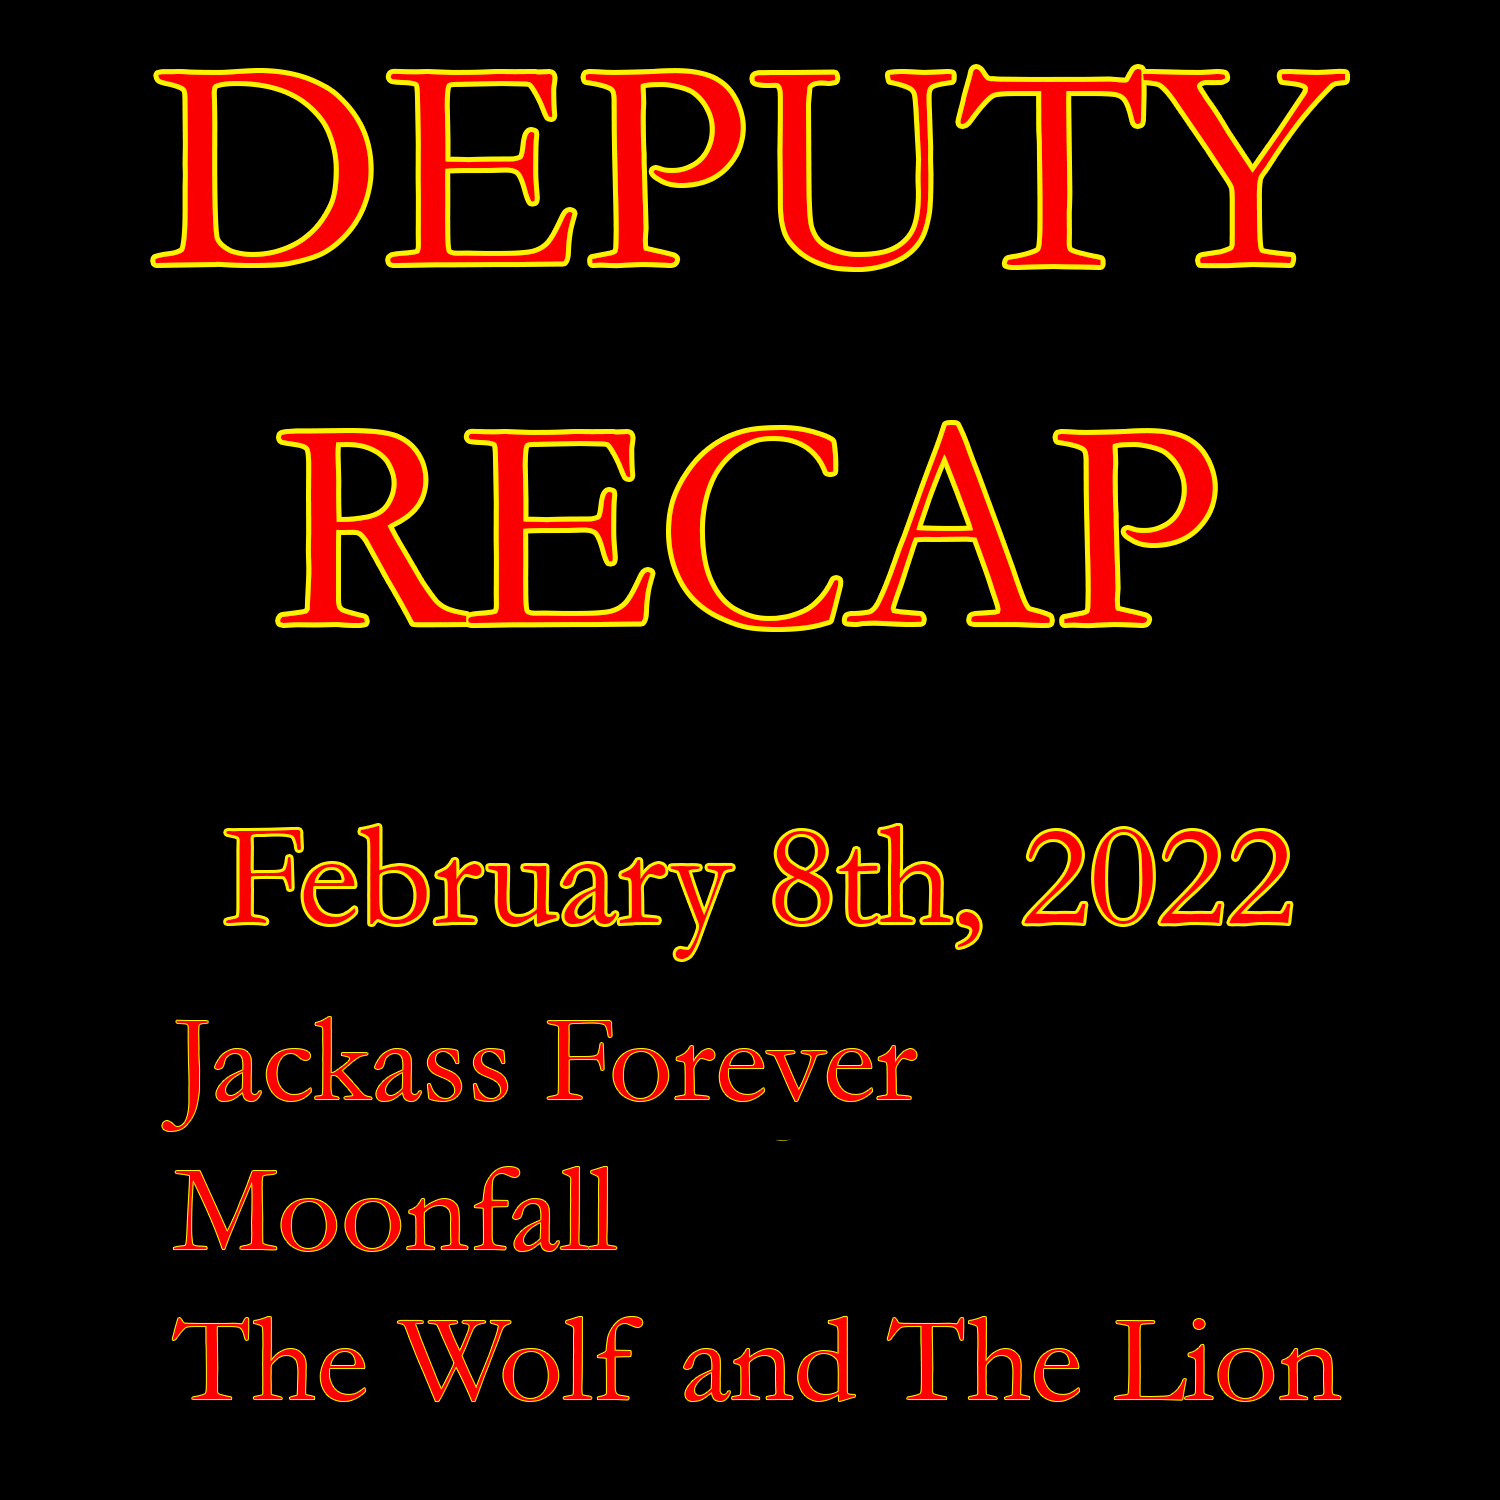 Movie Recap - February 8th, 2022